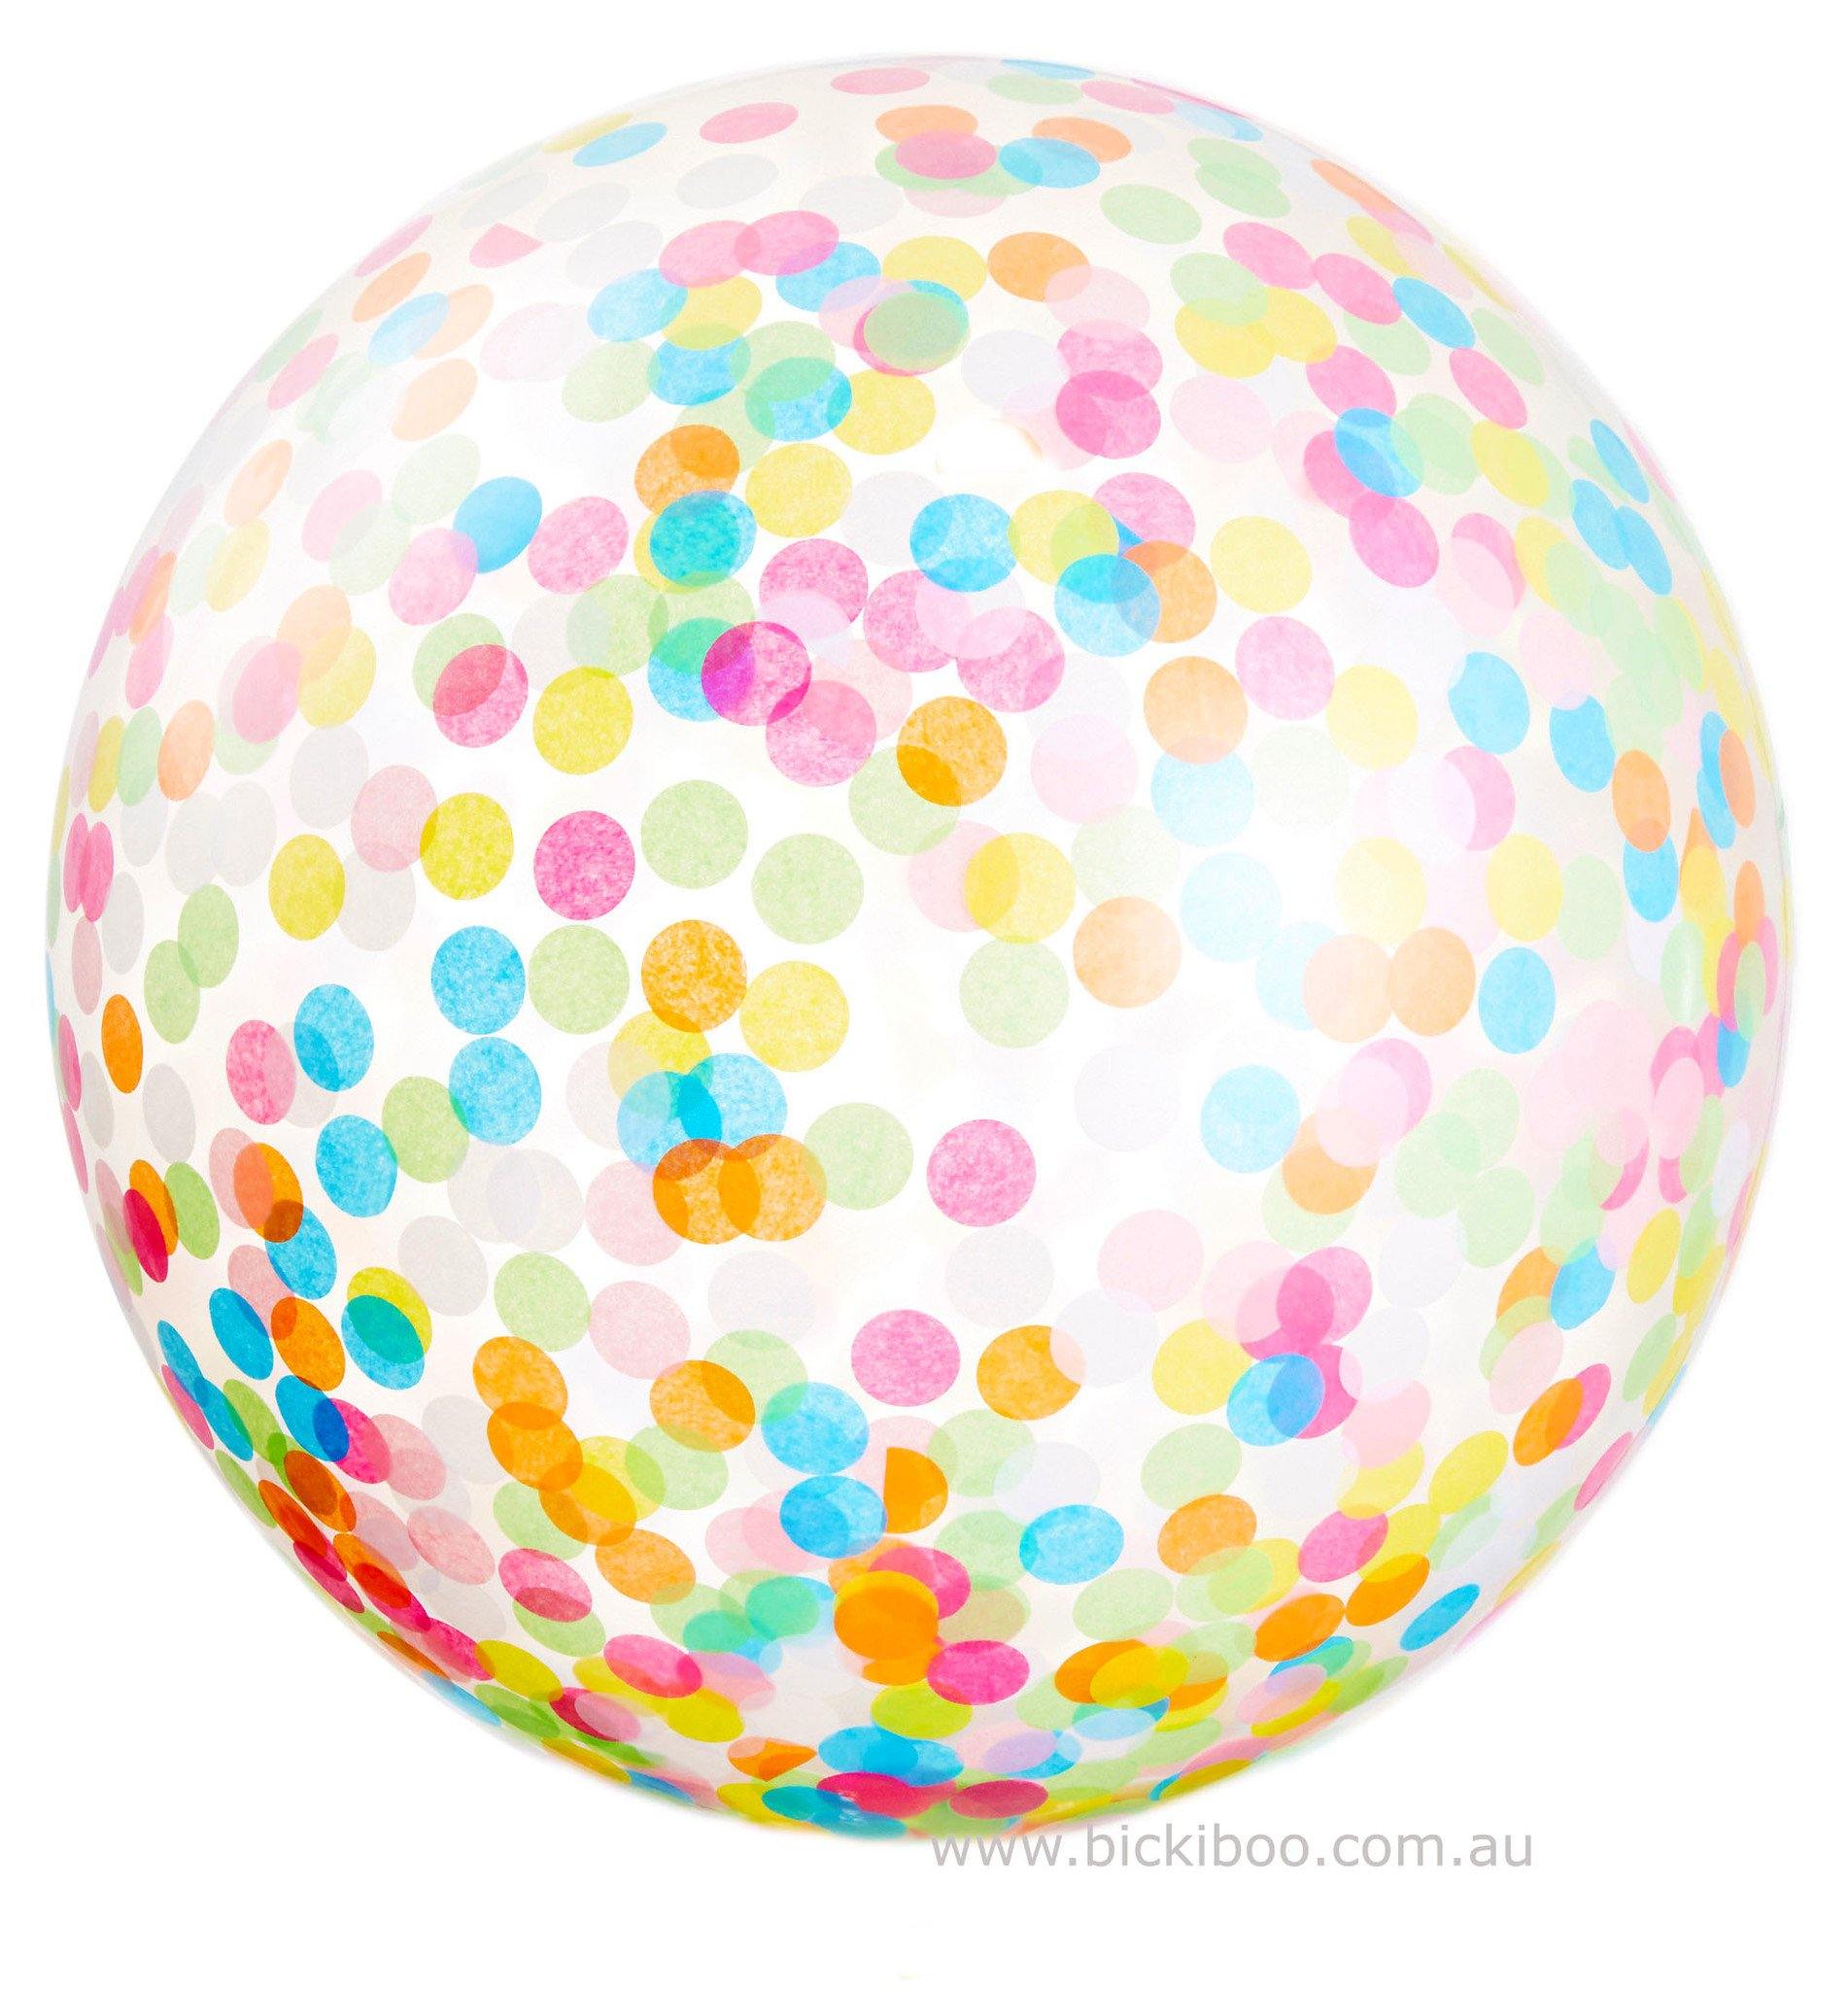 Custom Large Confetti Balloon - 60cm - Bickiboo Designs